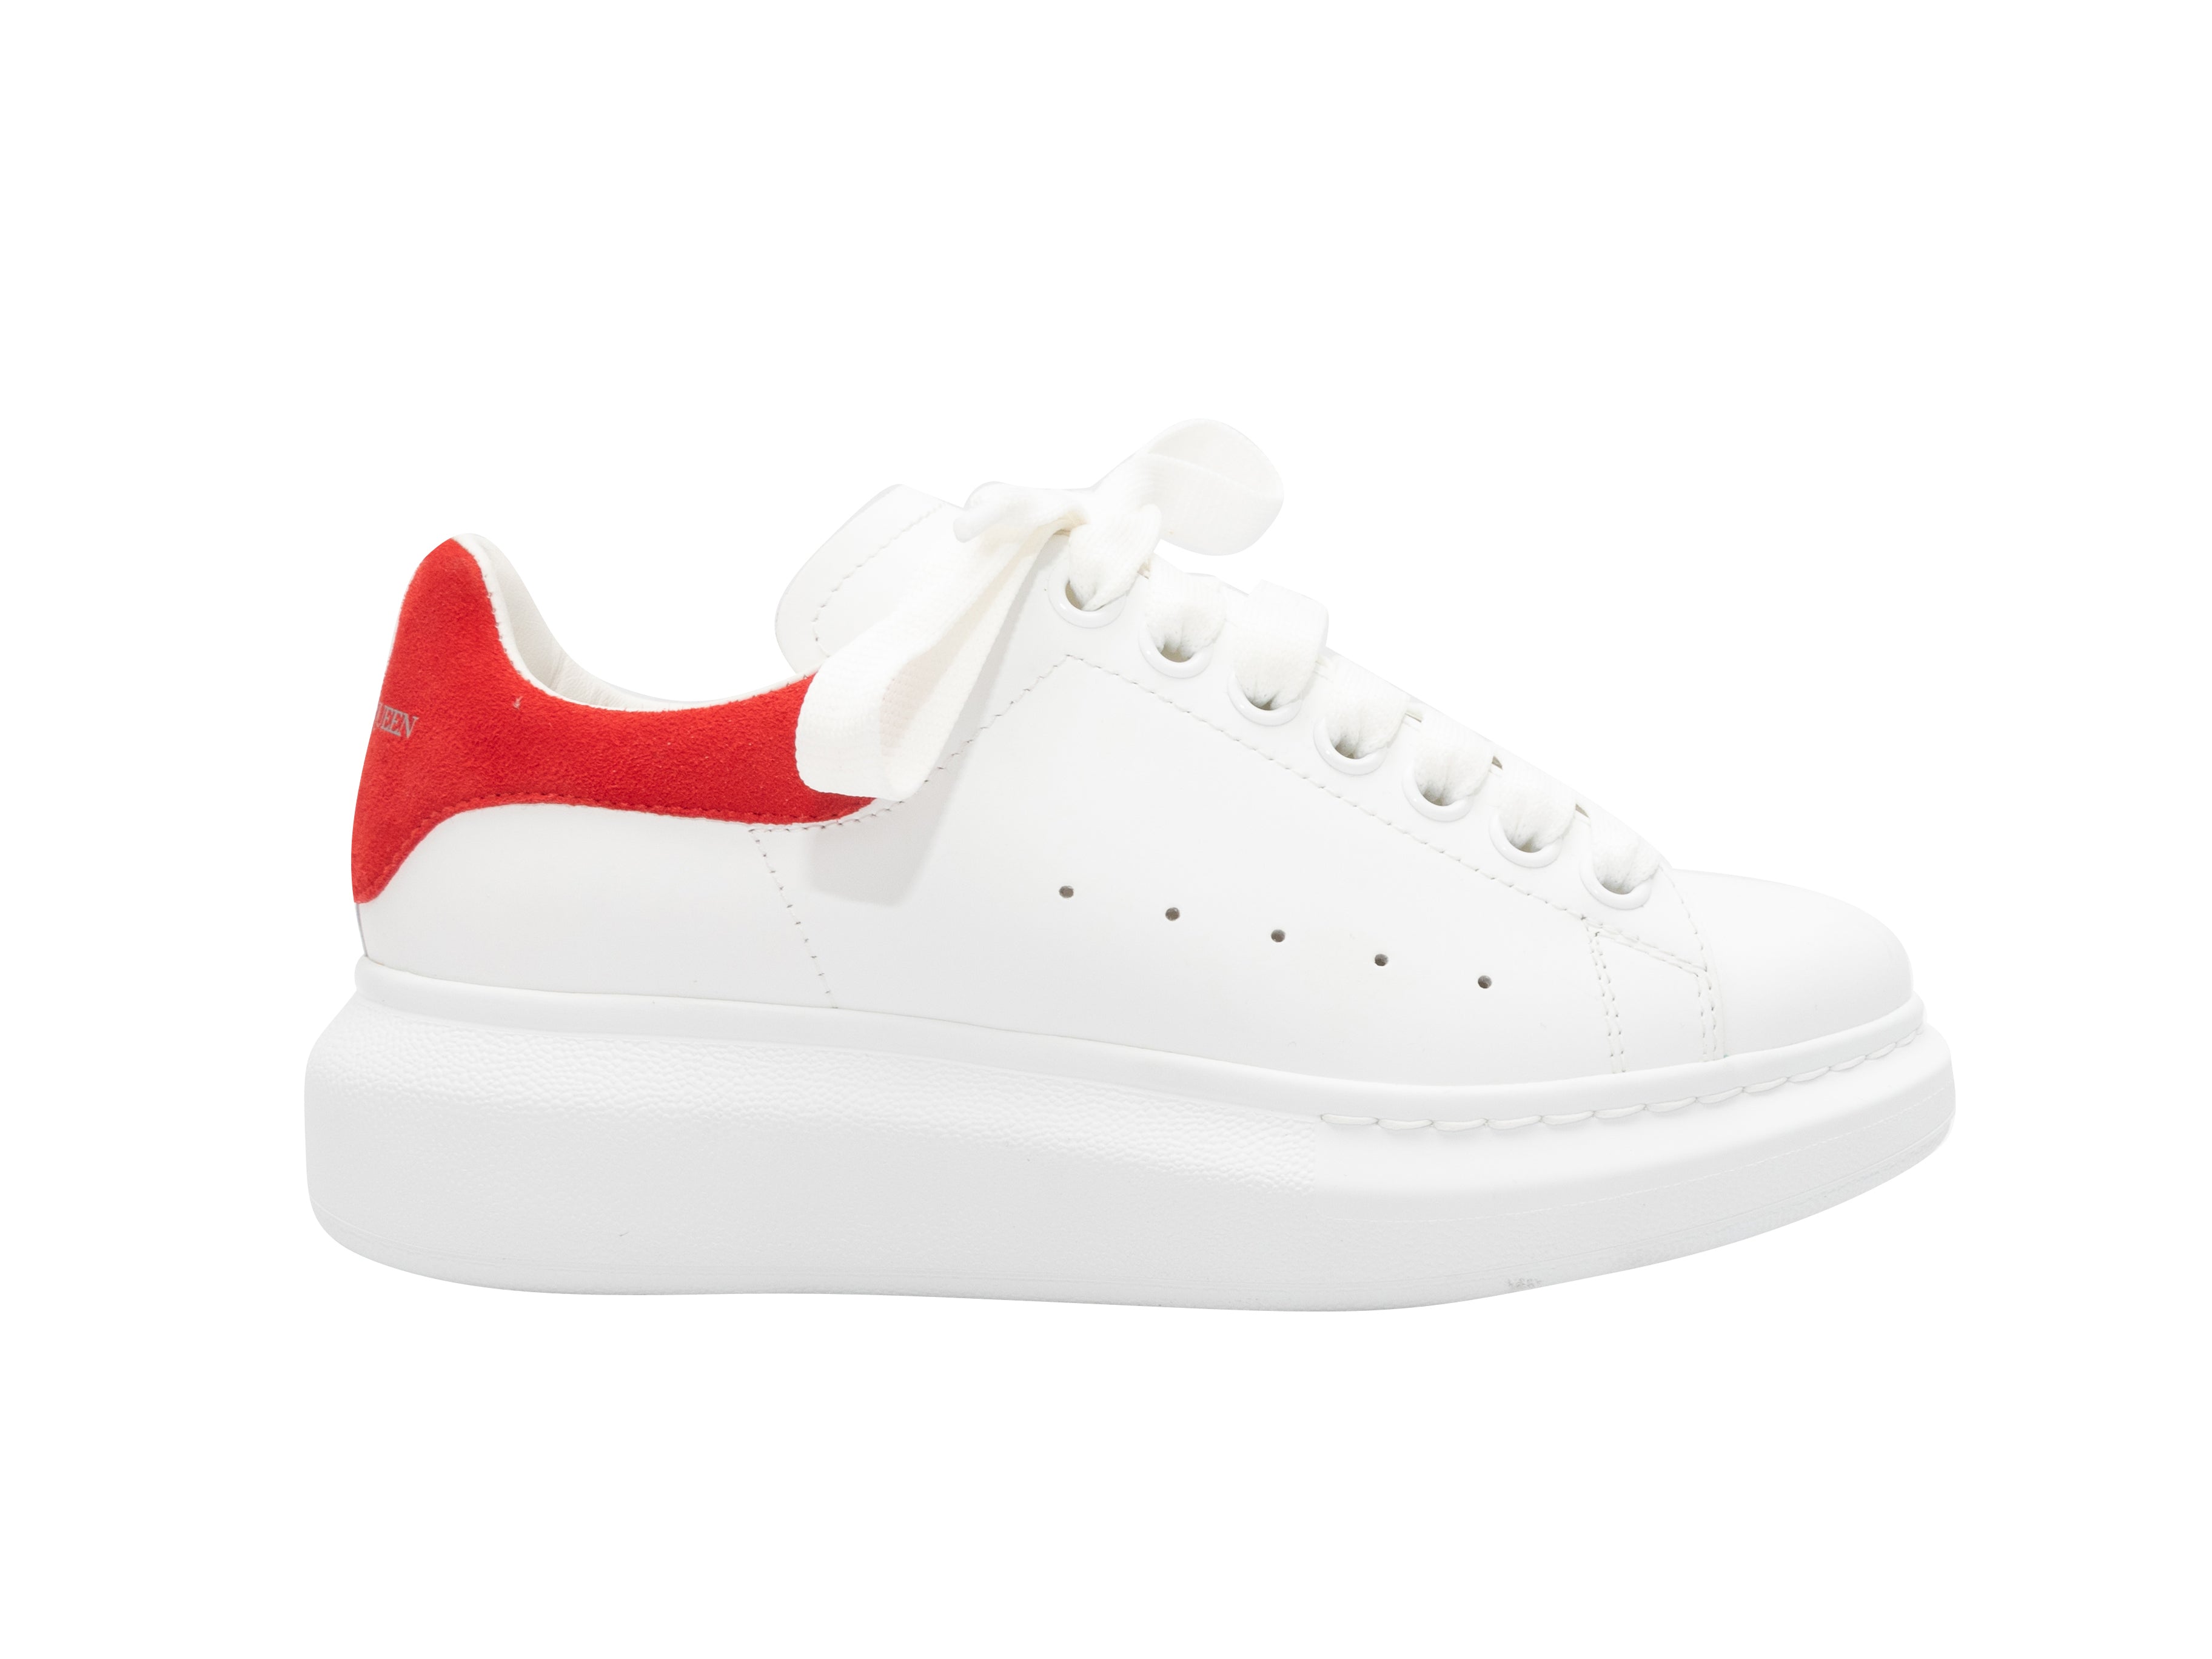 LOUIS VUITTON Time Out Sneaker White. Size 36.5